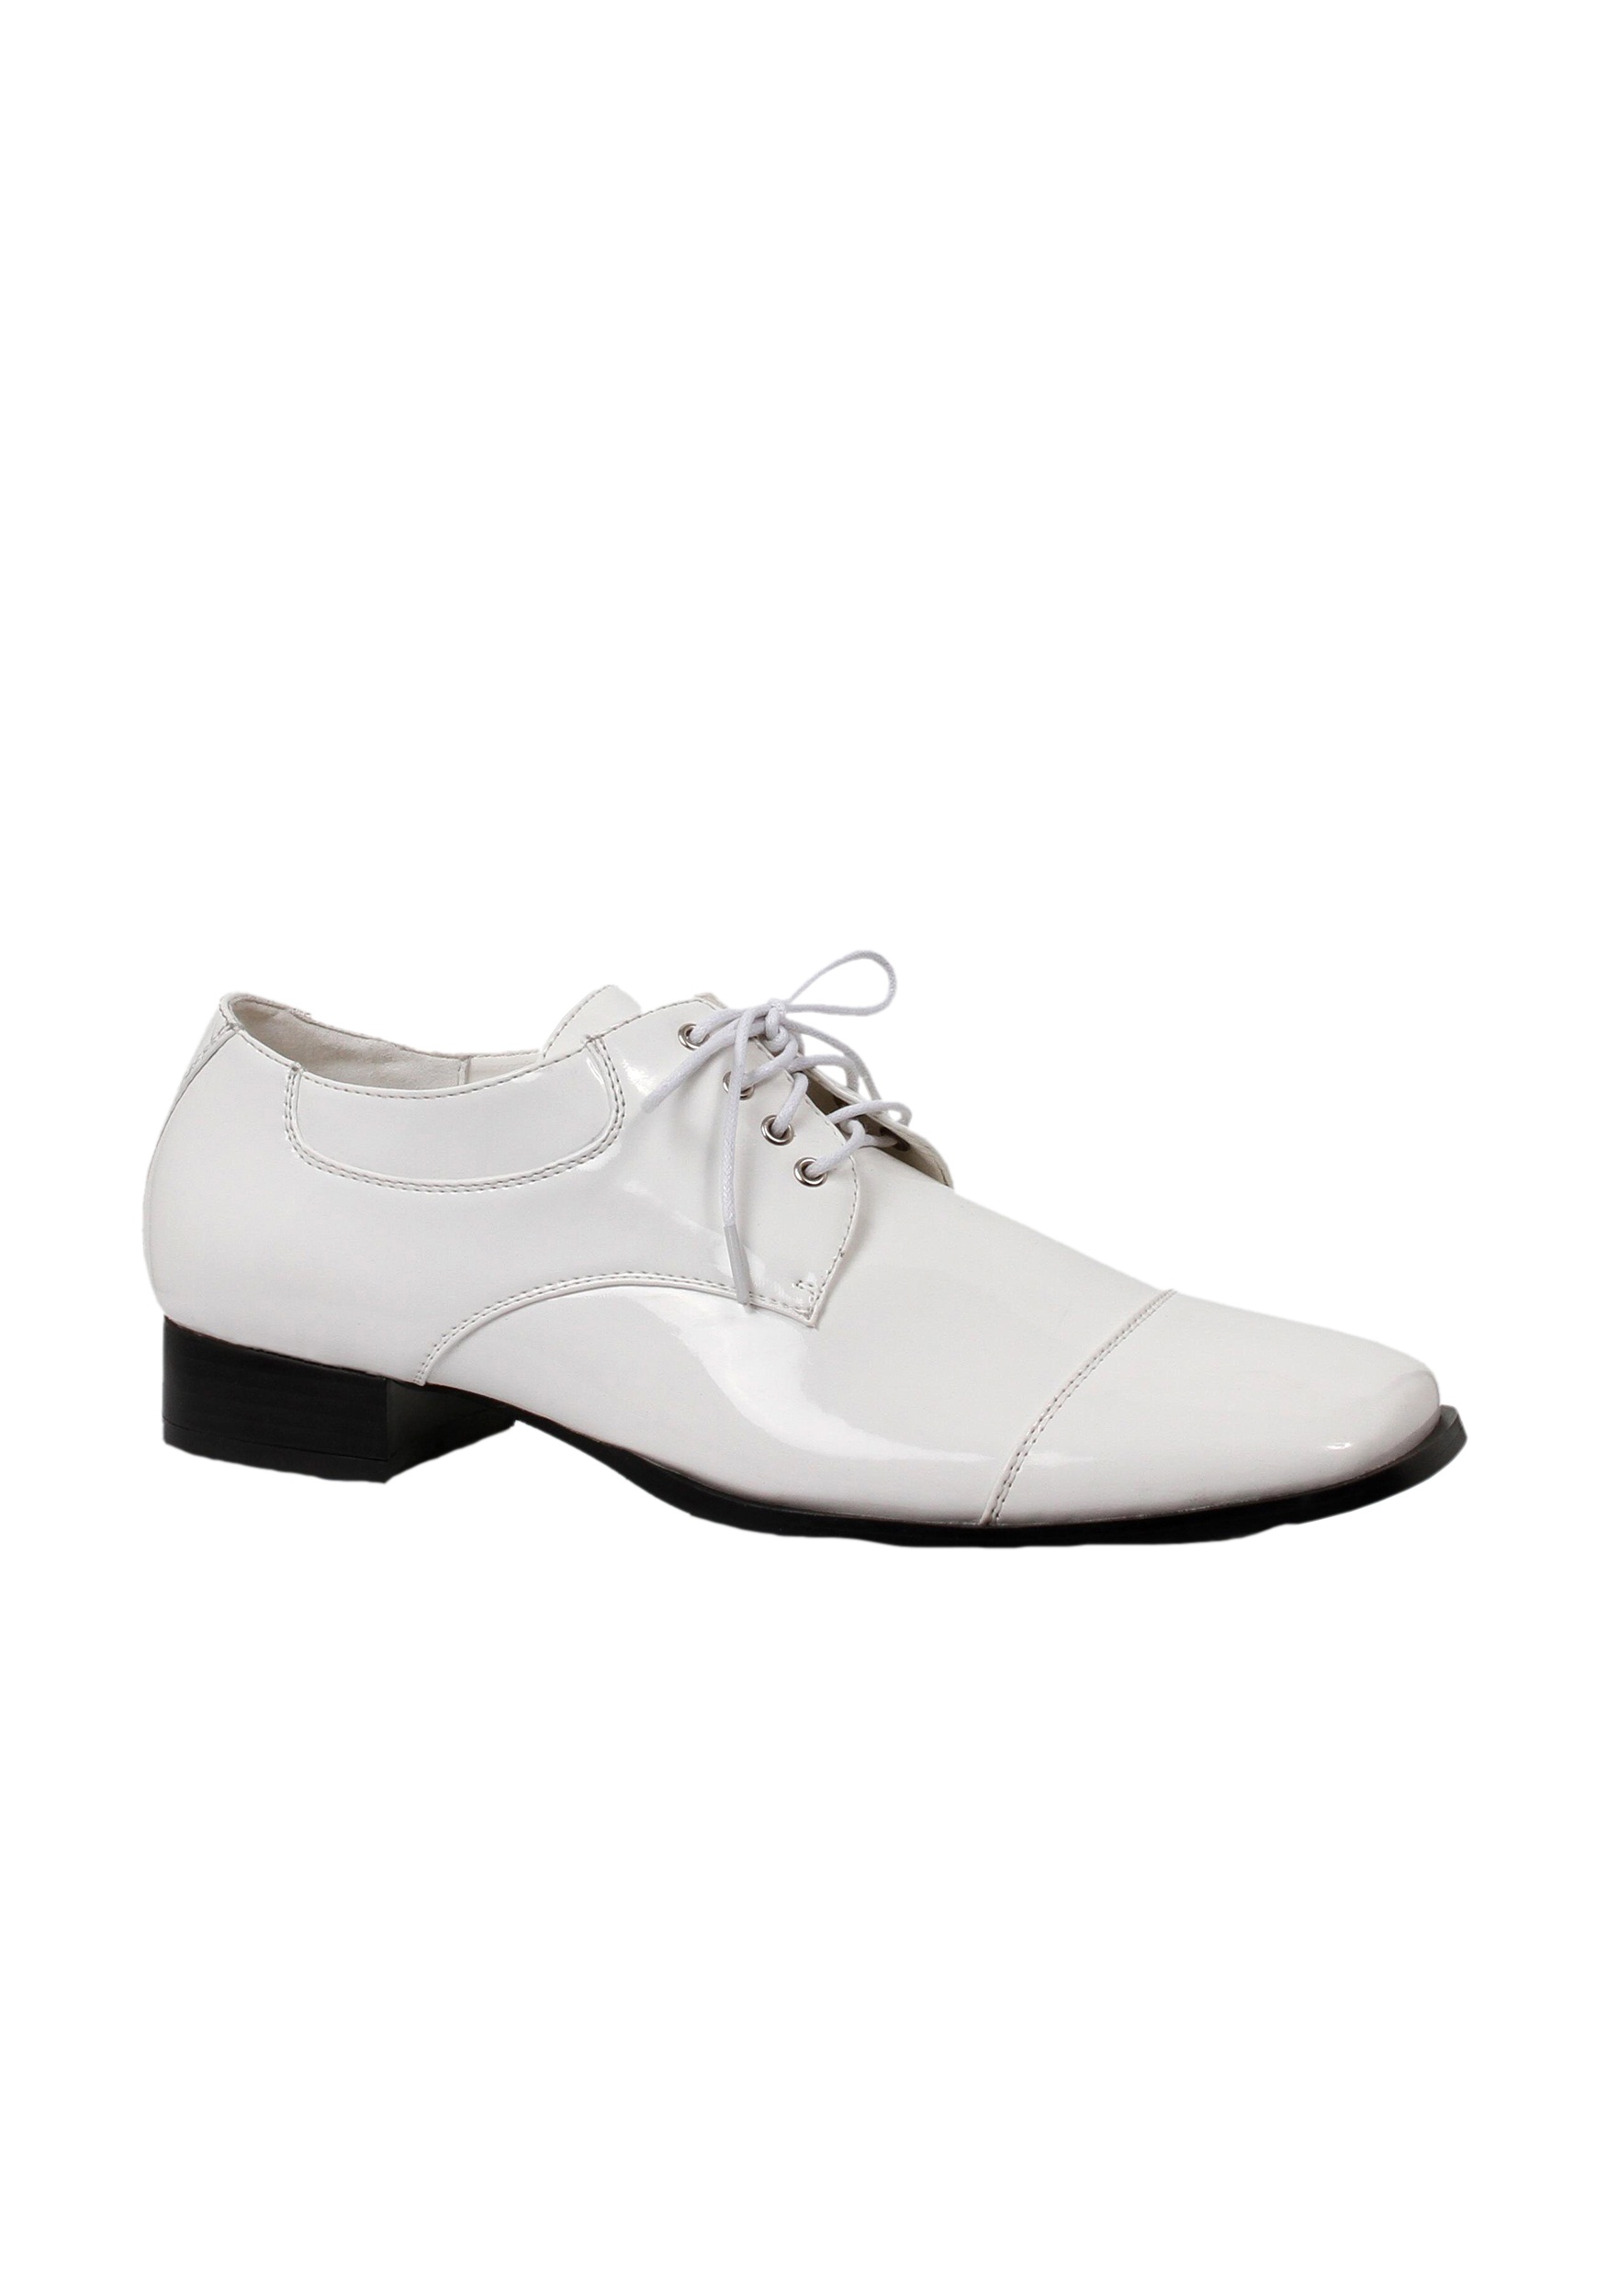 Men's White Dress Shoes